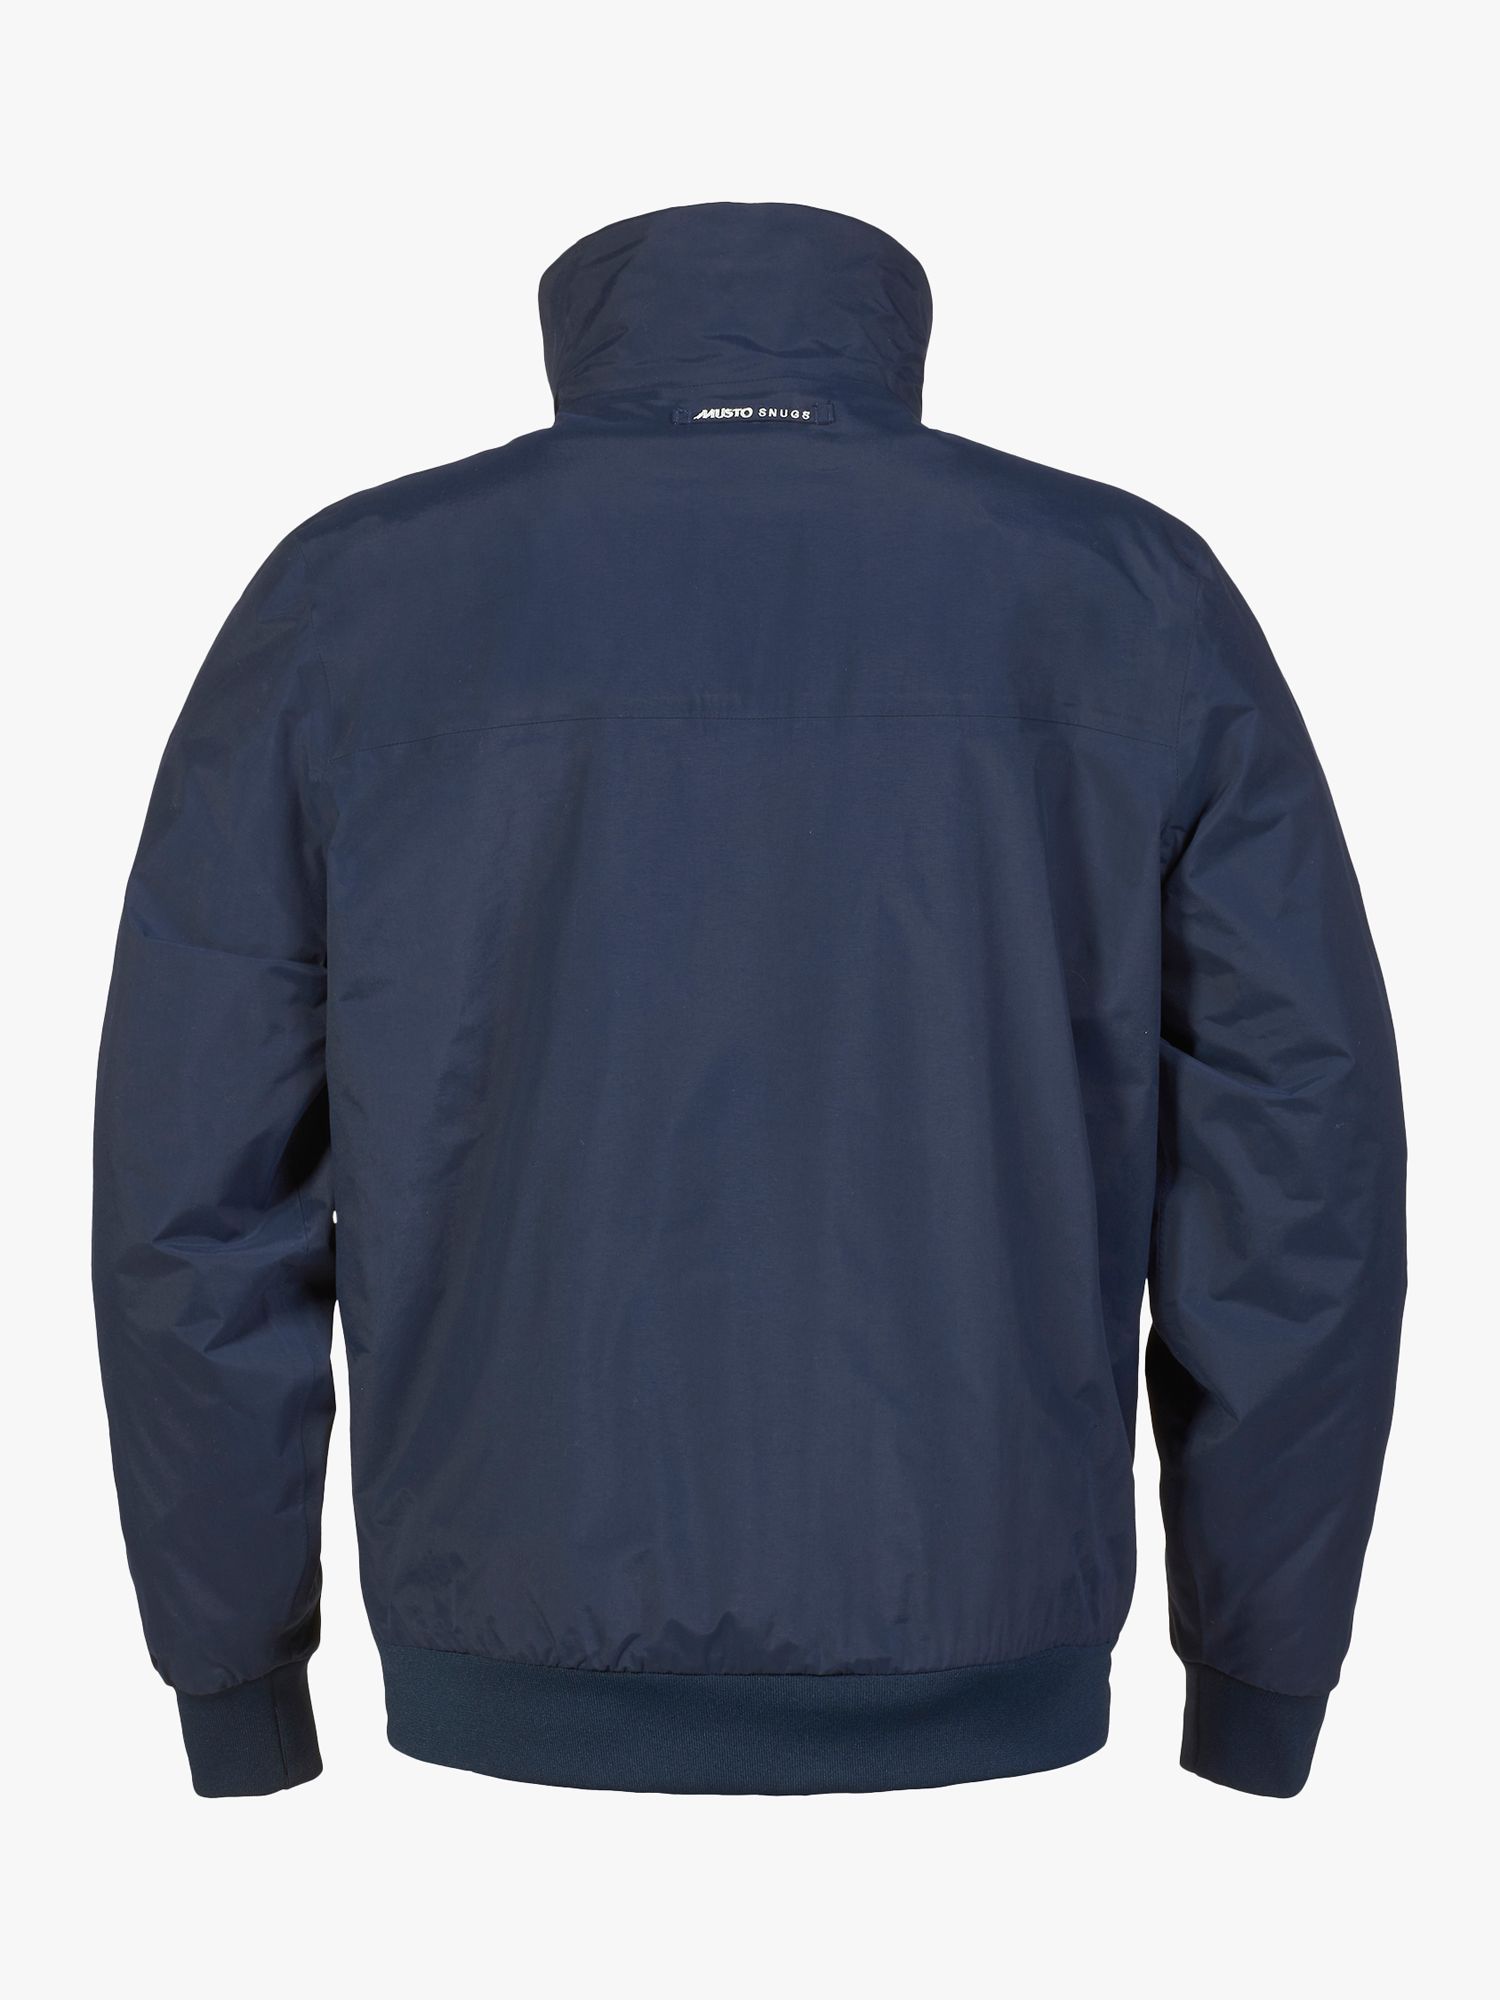 Musto Classic Snug Blouson 2.0 Men's Jacket, Navy/Carbon, S